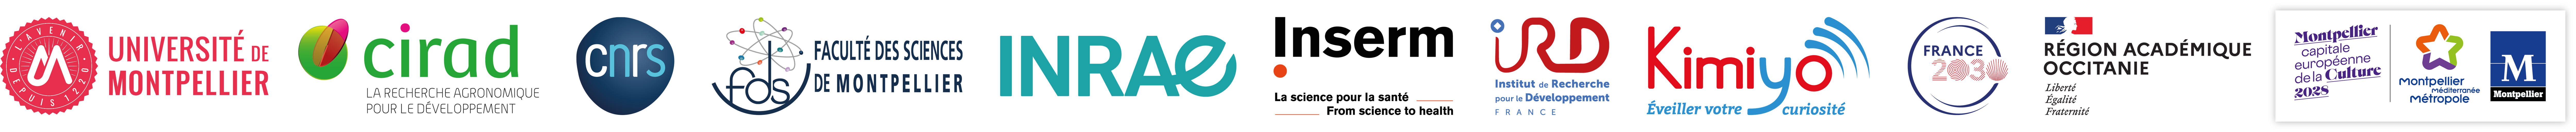 Bloc logo sud de sciences